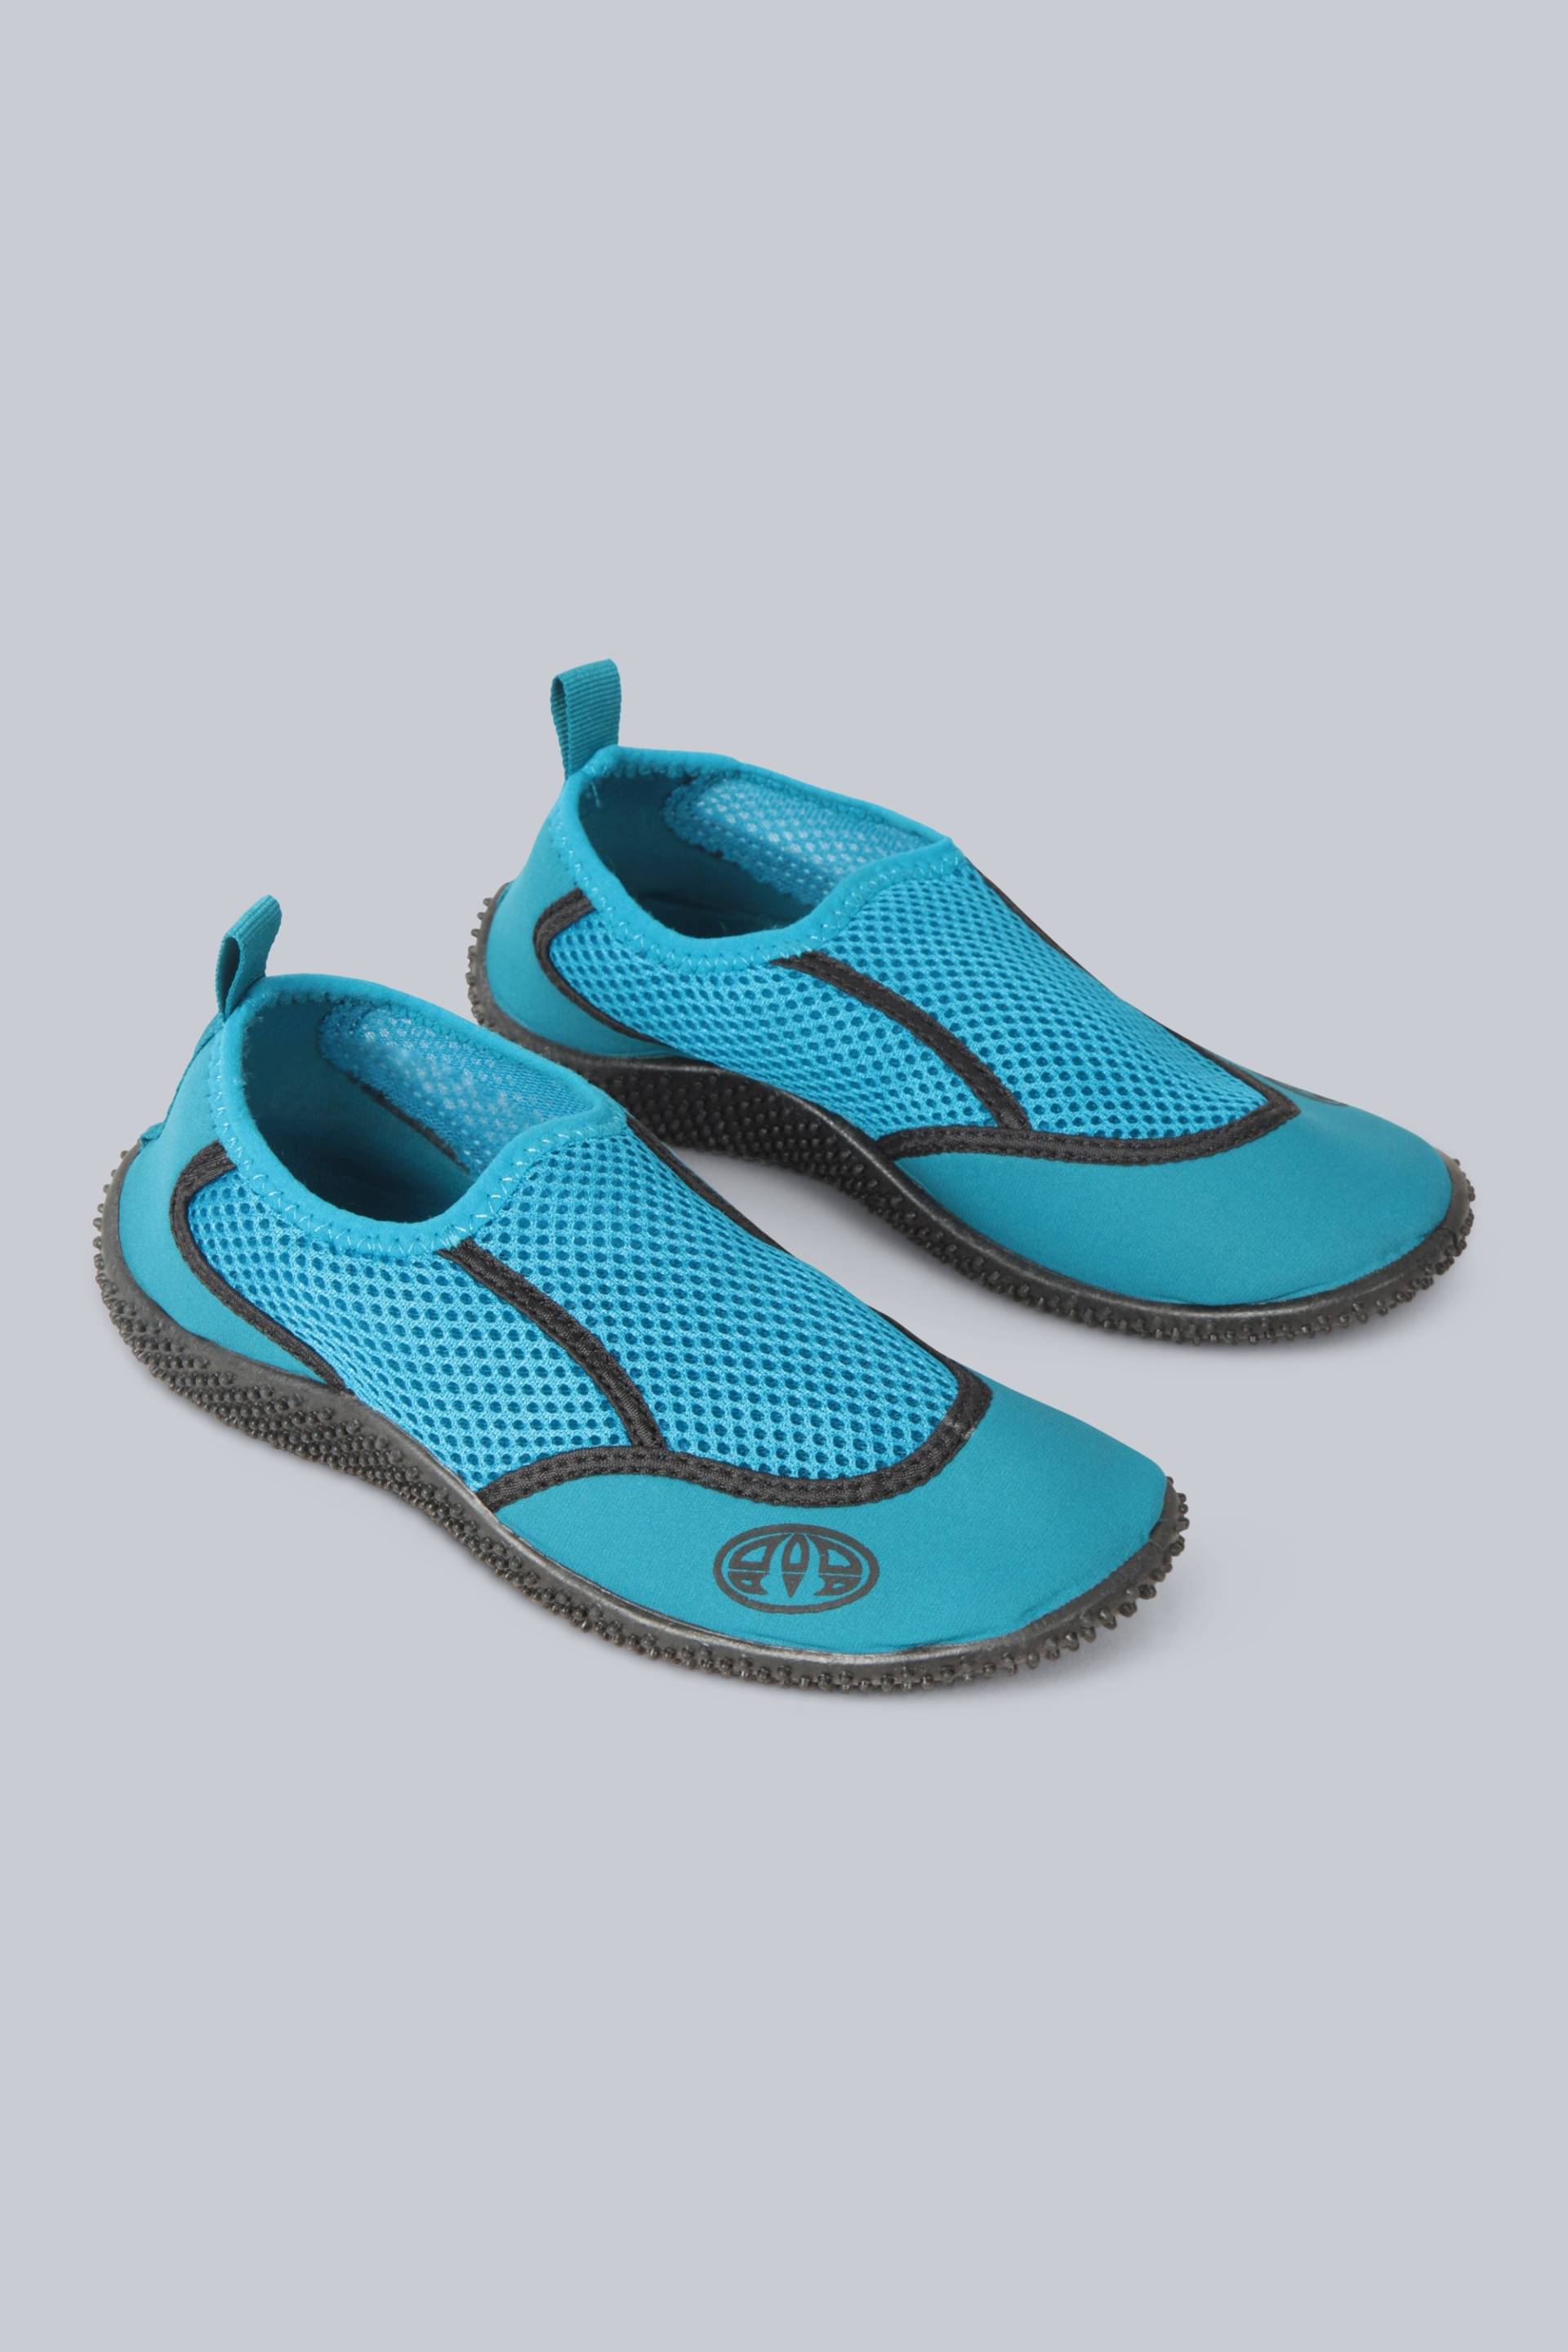 Cove Kinder Aqua-Schuhe - Blau von Animal